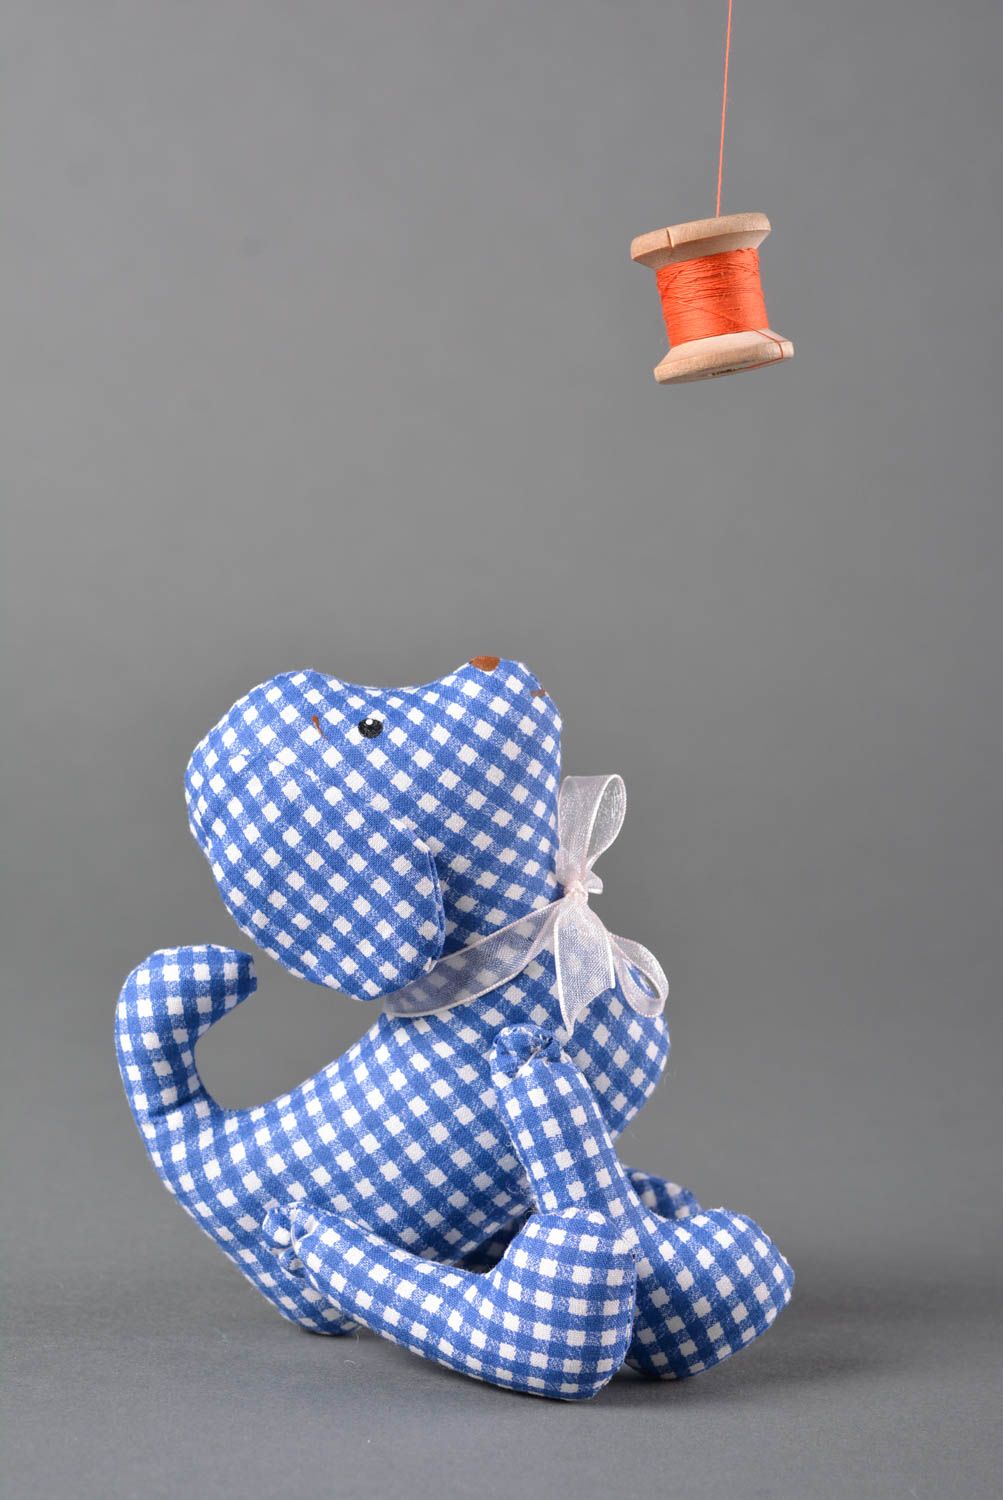 Handmade animal toy for nursery decor ideas soft toy for baby gift ideas photo 2